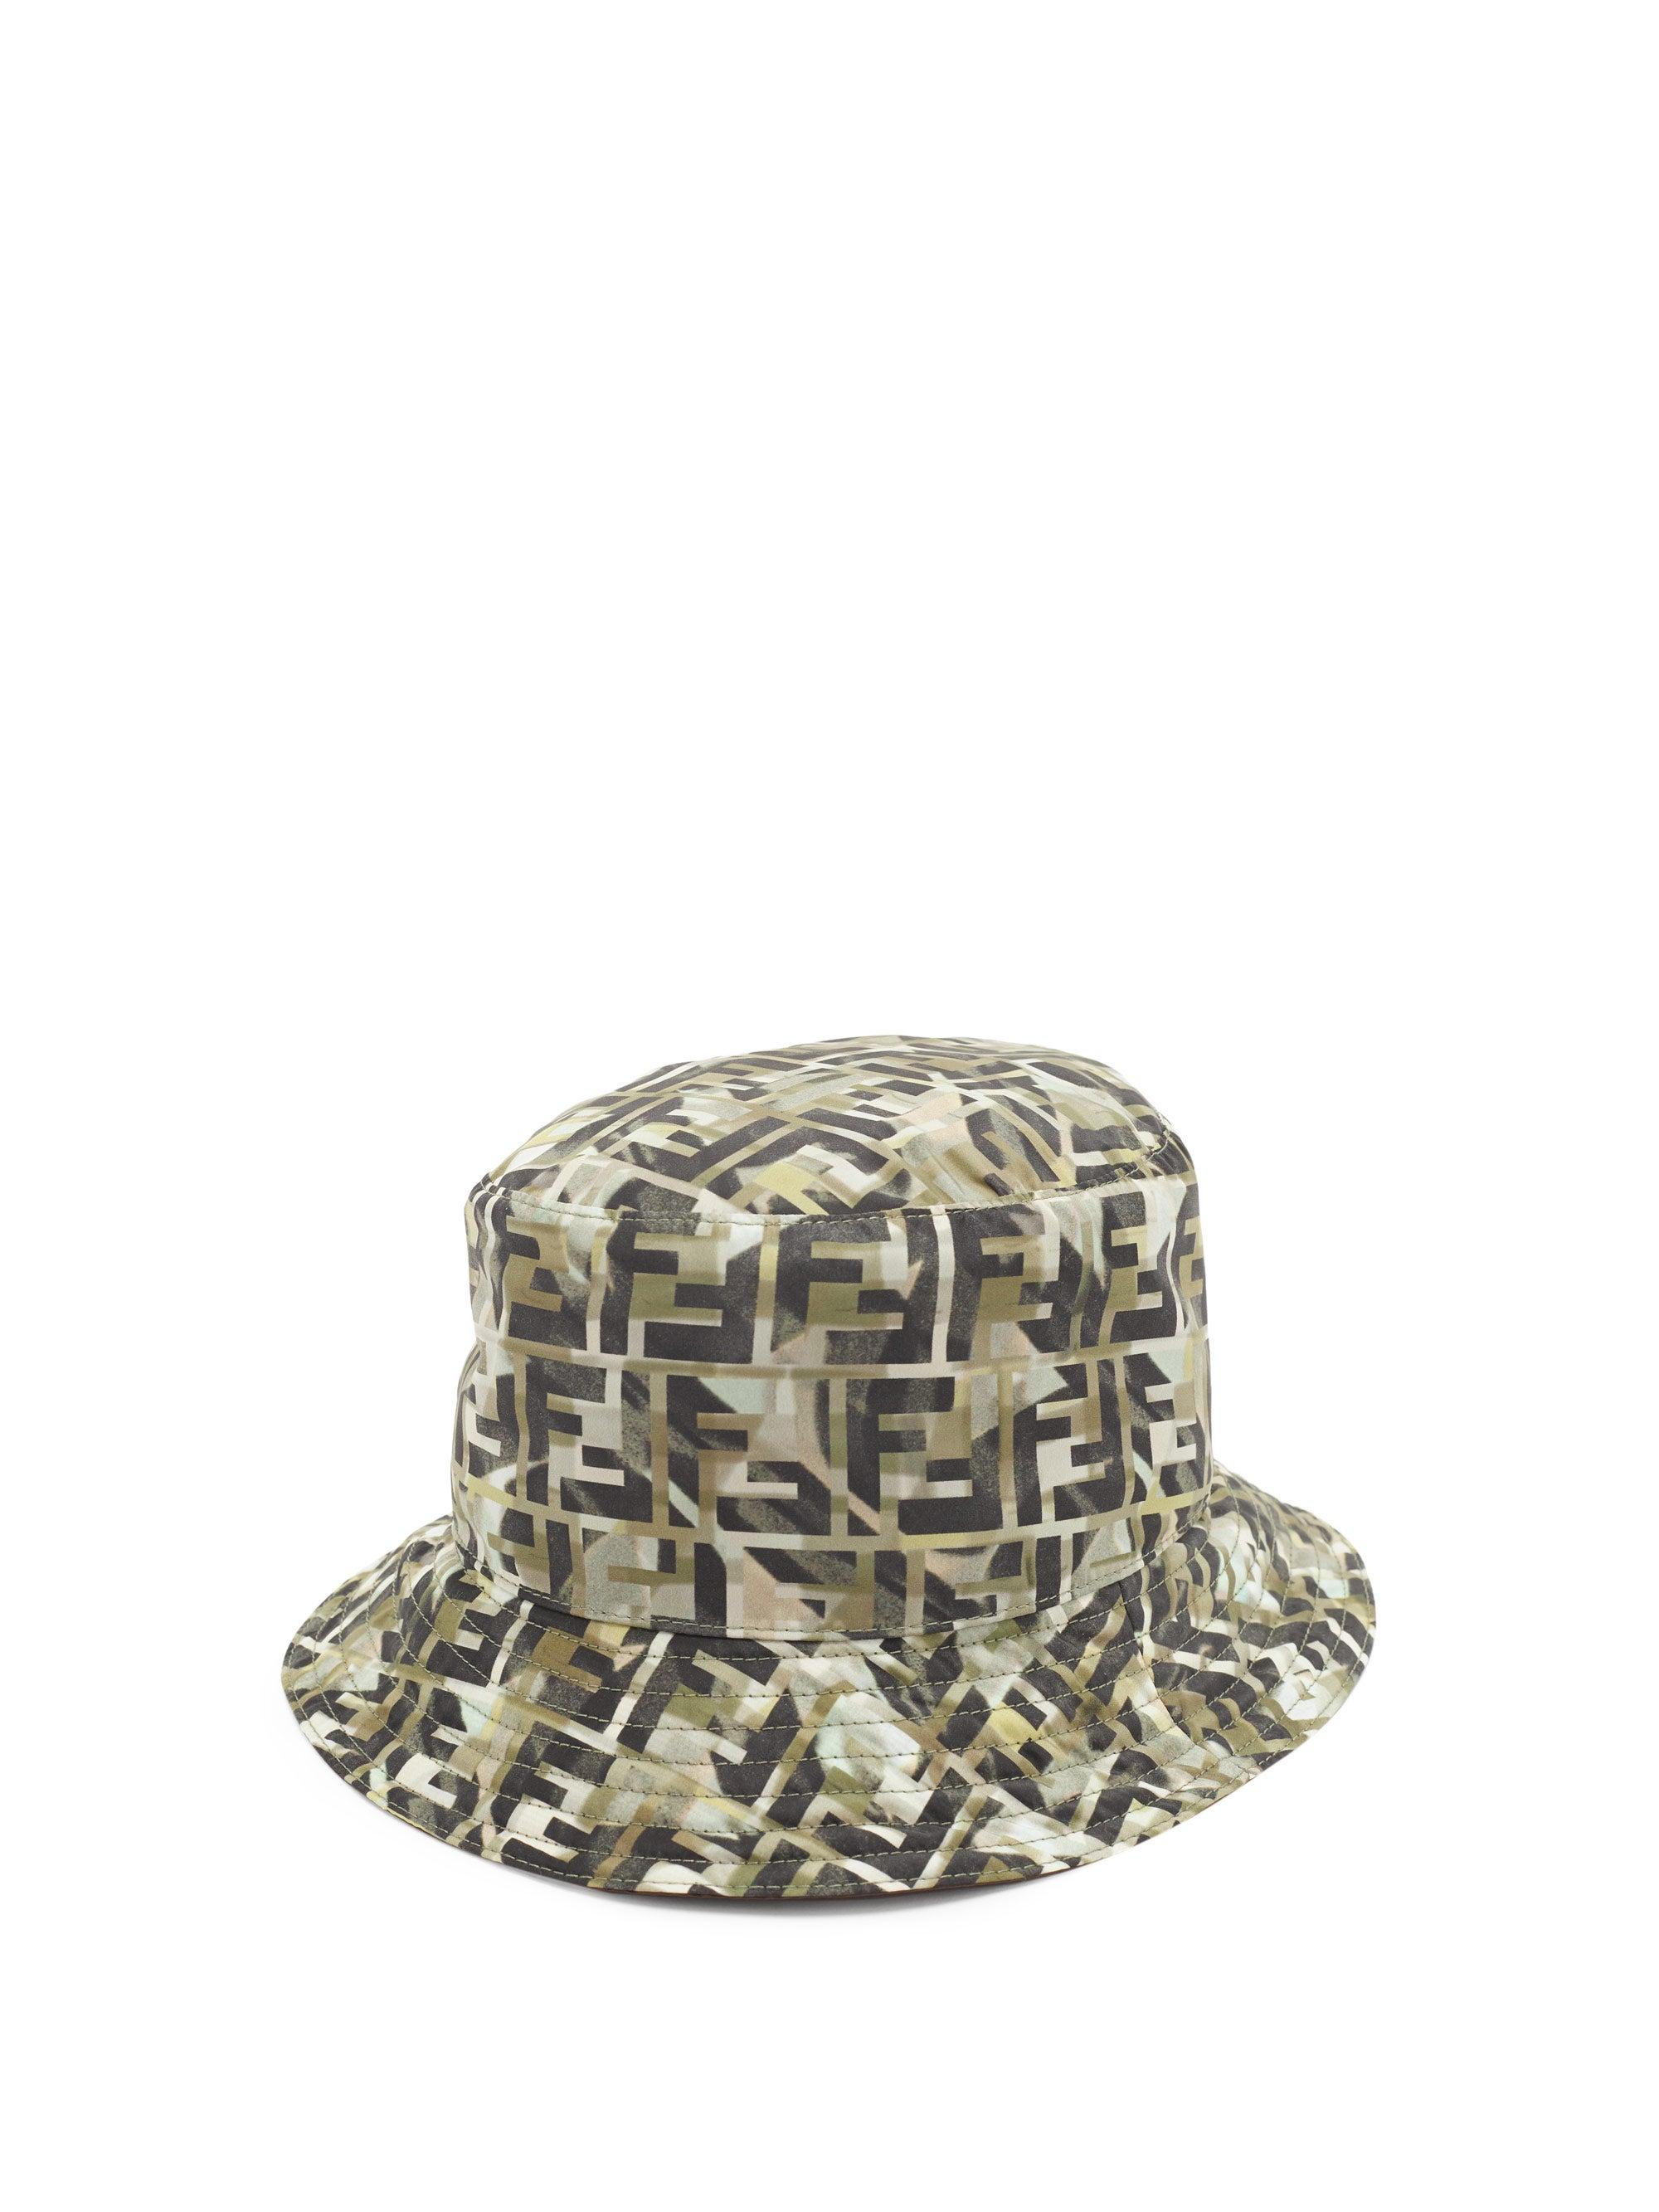 Fendi Ff-monogram Technical Bucket Hat for Men - Lyst